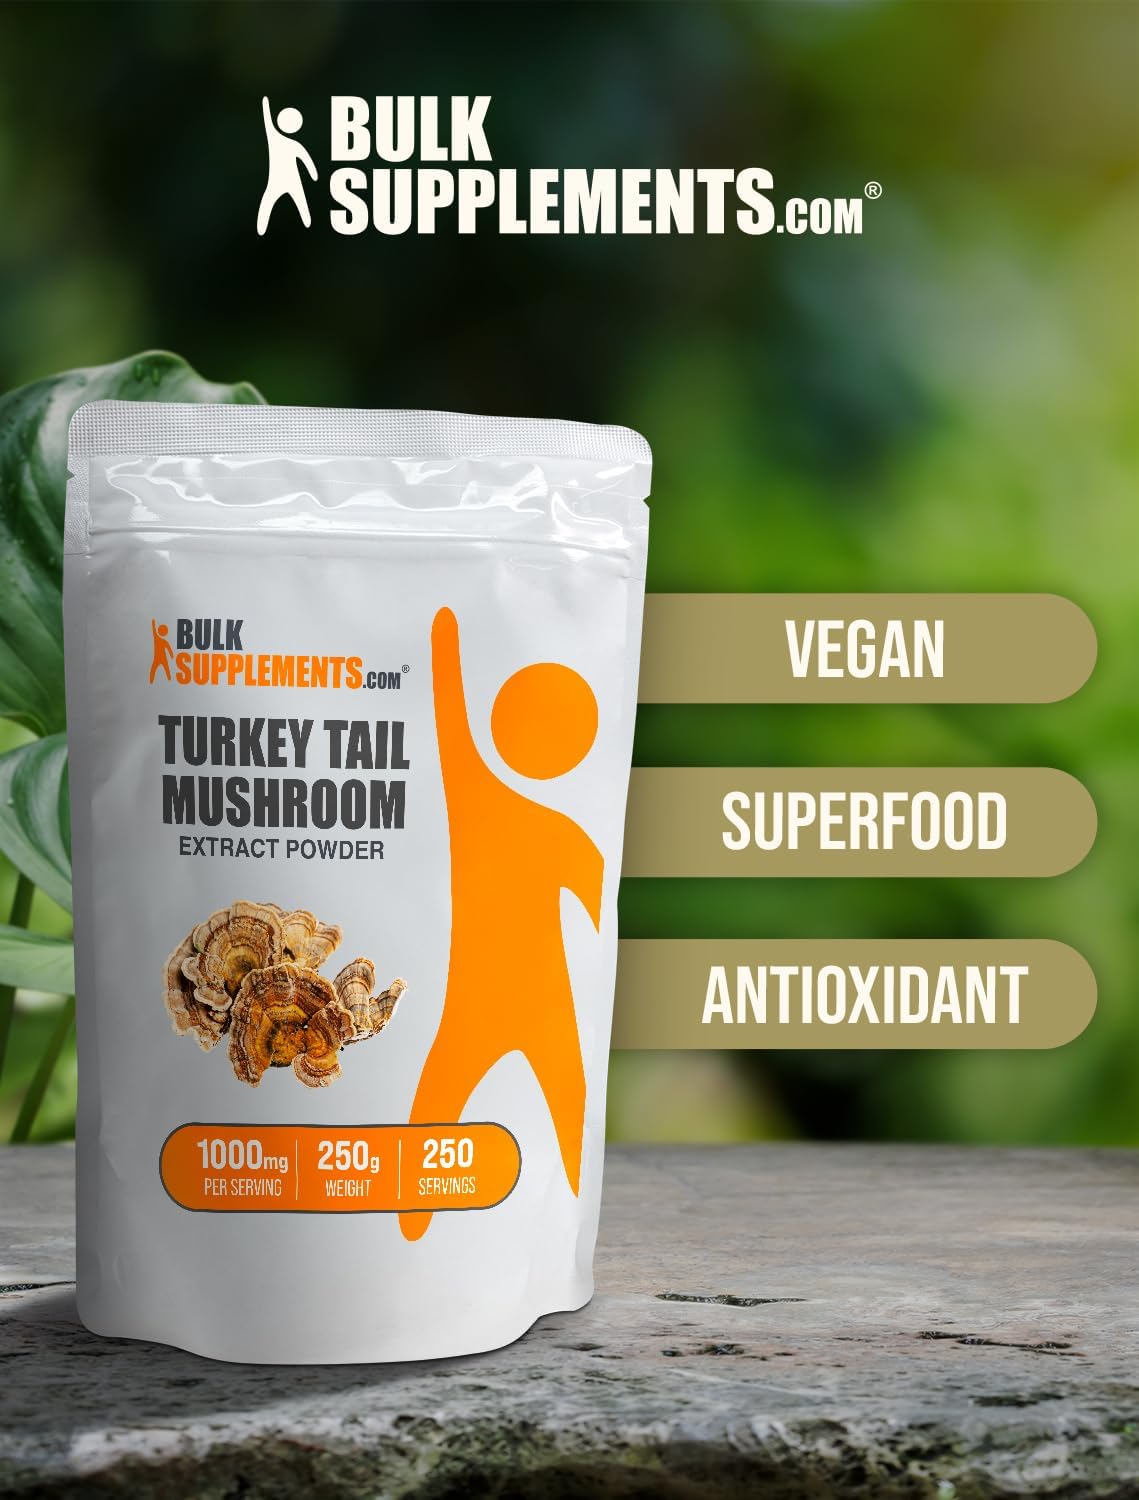 BULKSUPPLEMENTS.COM Turkey Tail Mushroom Extract Powder - Coriolus Versicolor Extract, Turkey Tail Mushroom Powder - Vegan & Gluten Free, 1000mg per Serving. 250g (8.8 oz) (Pack of 1) : Health & Household